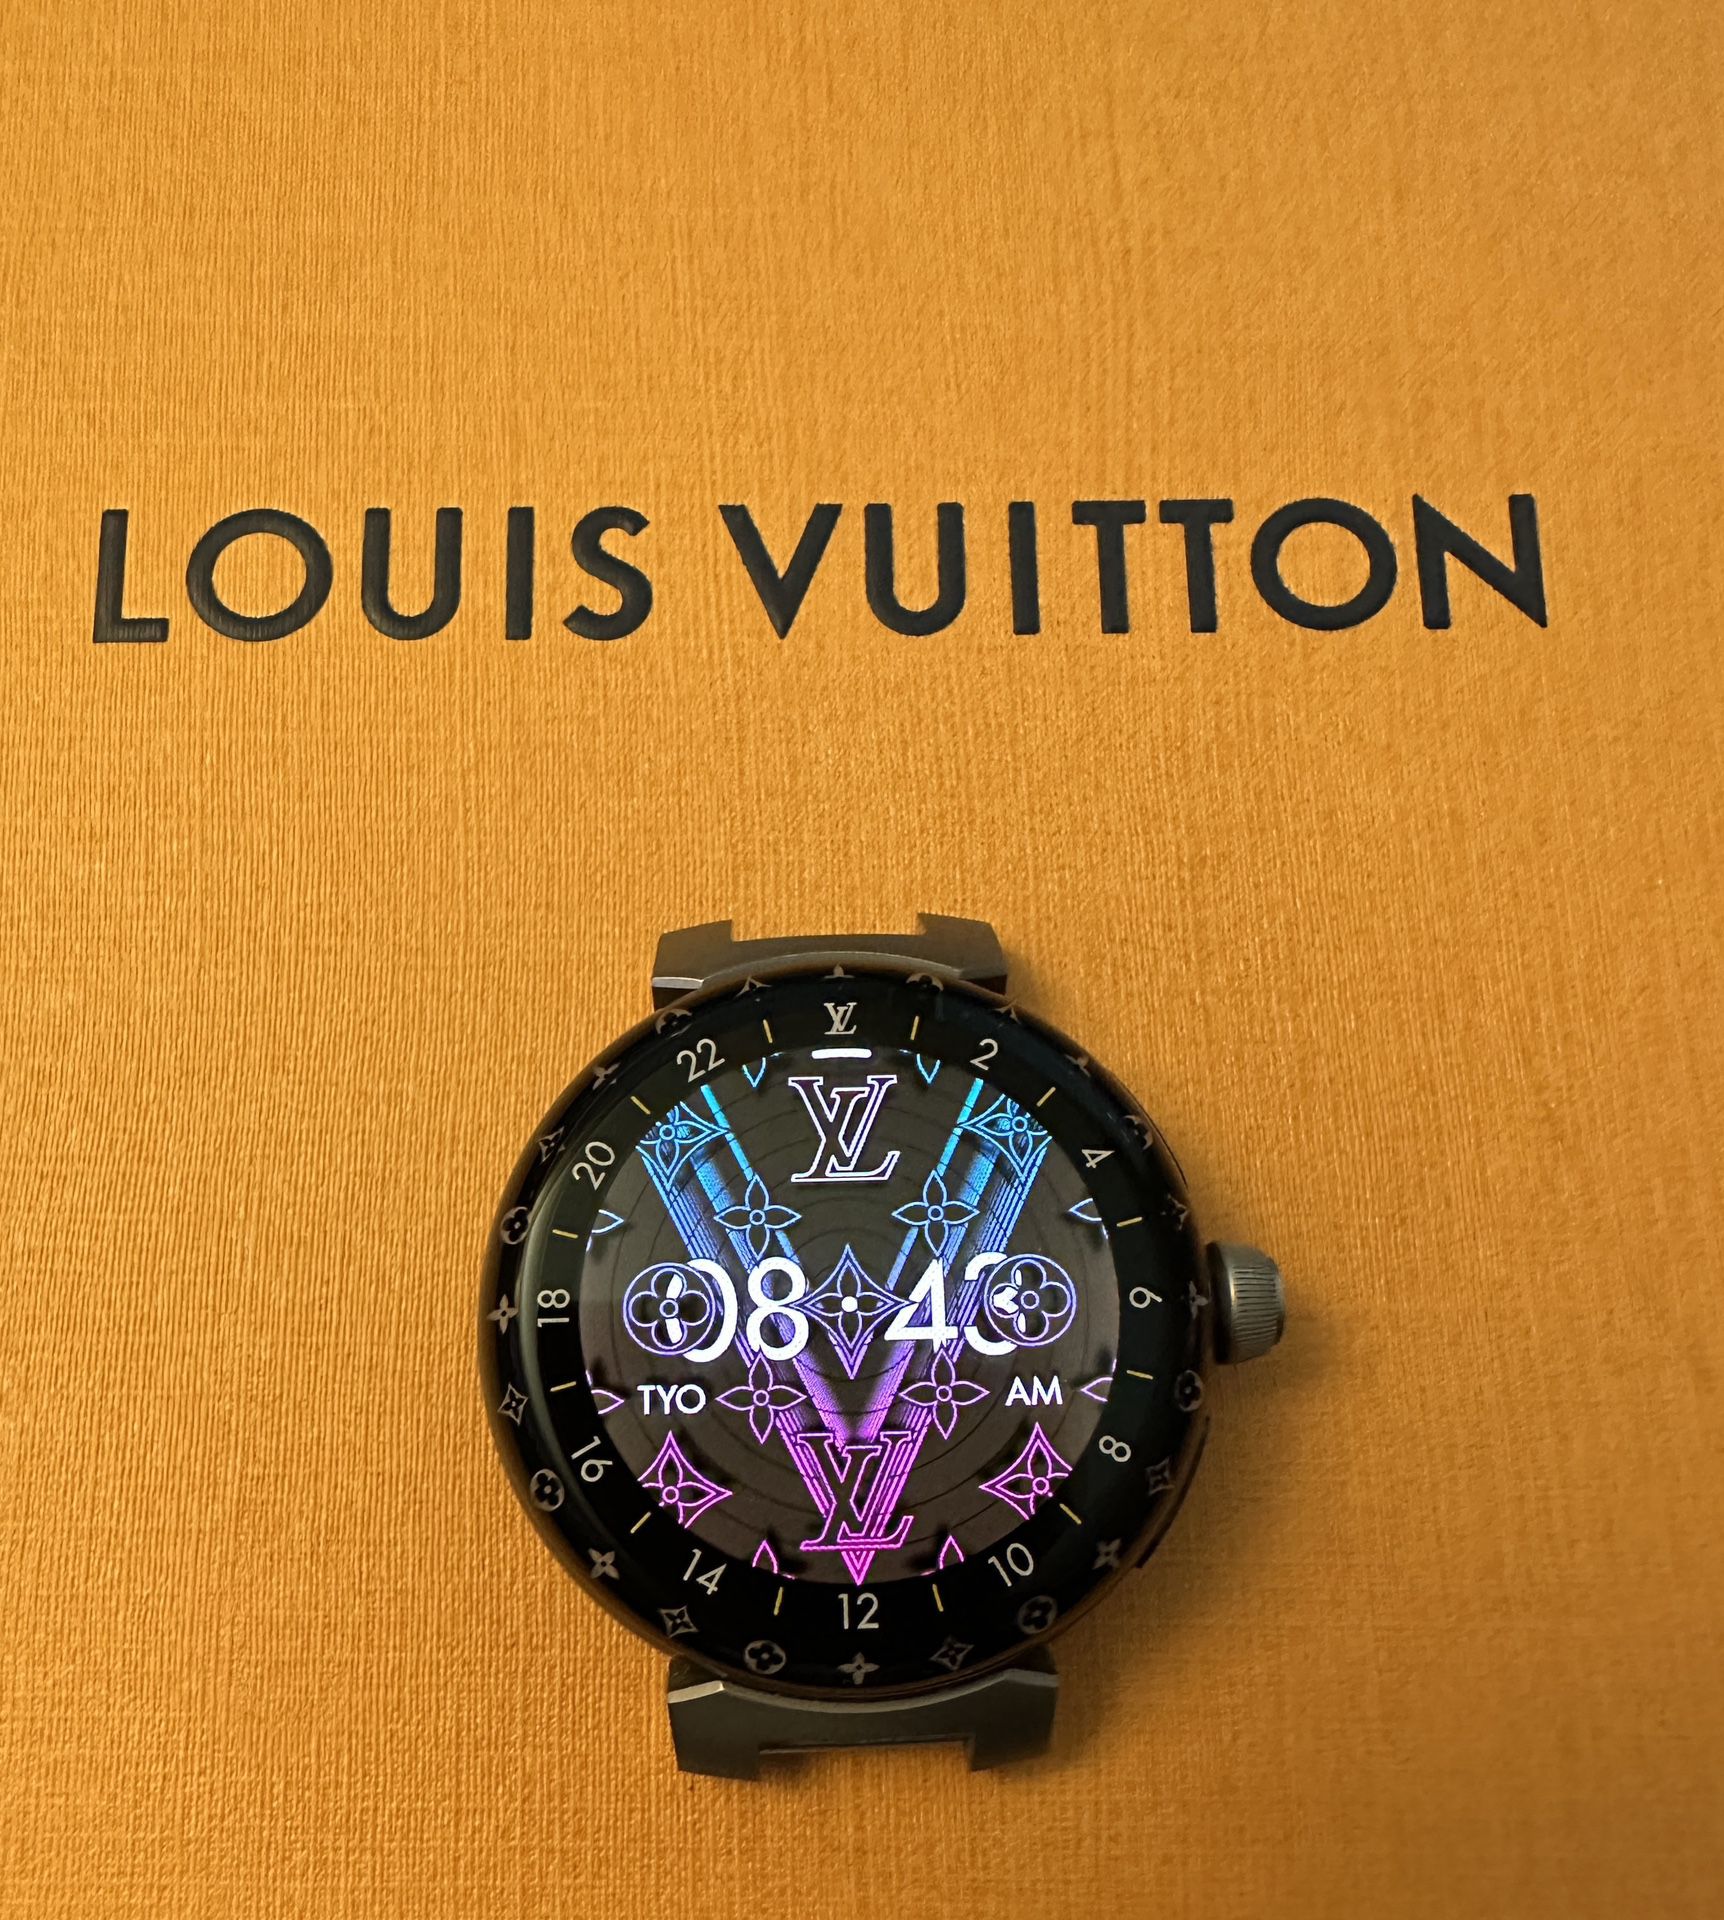 Louis Vuitton Tambour Horizon Light Up: vídeo, fotos en vivo y